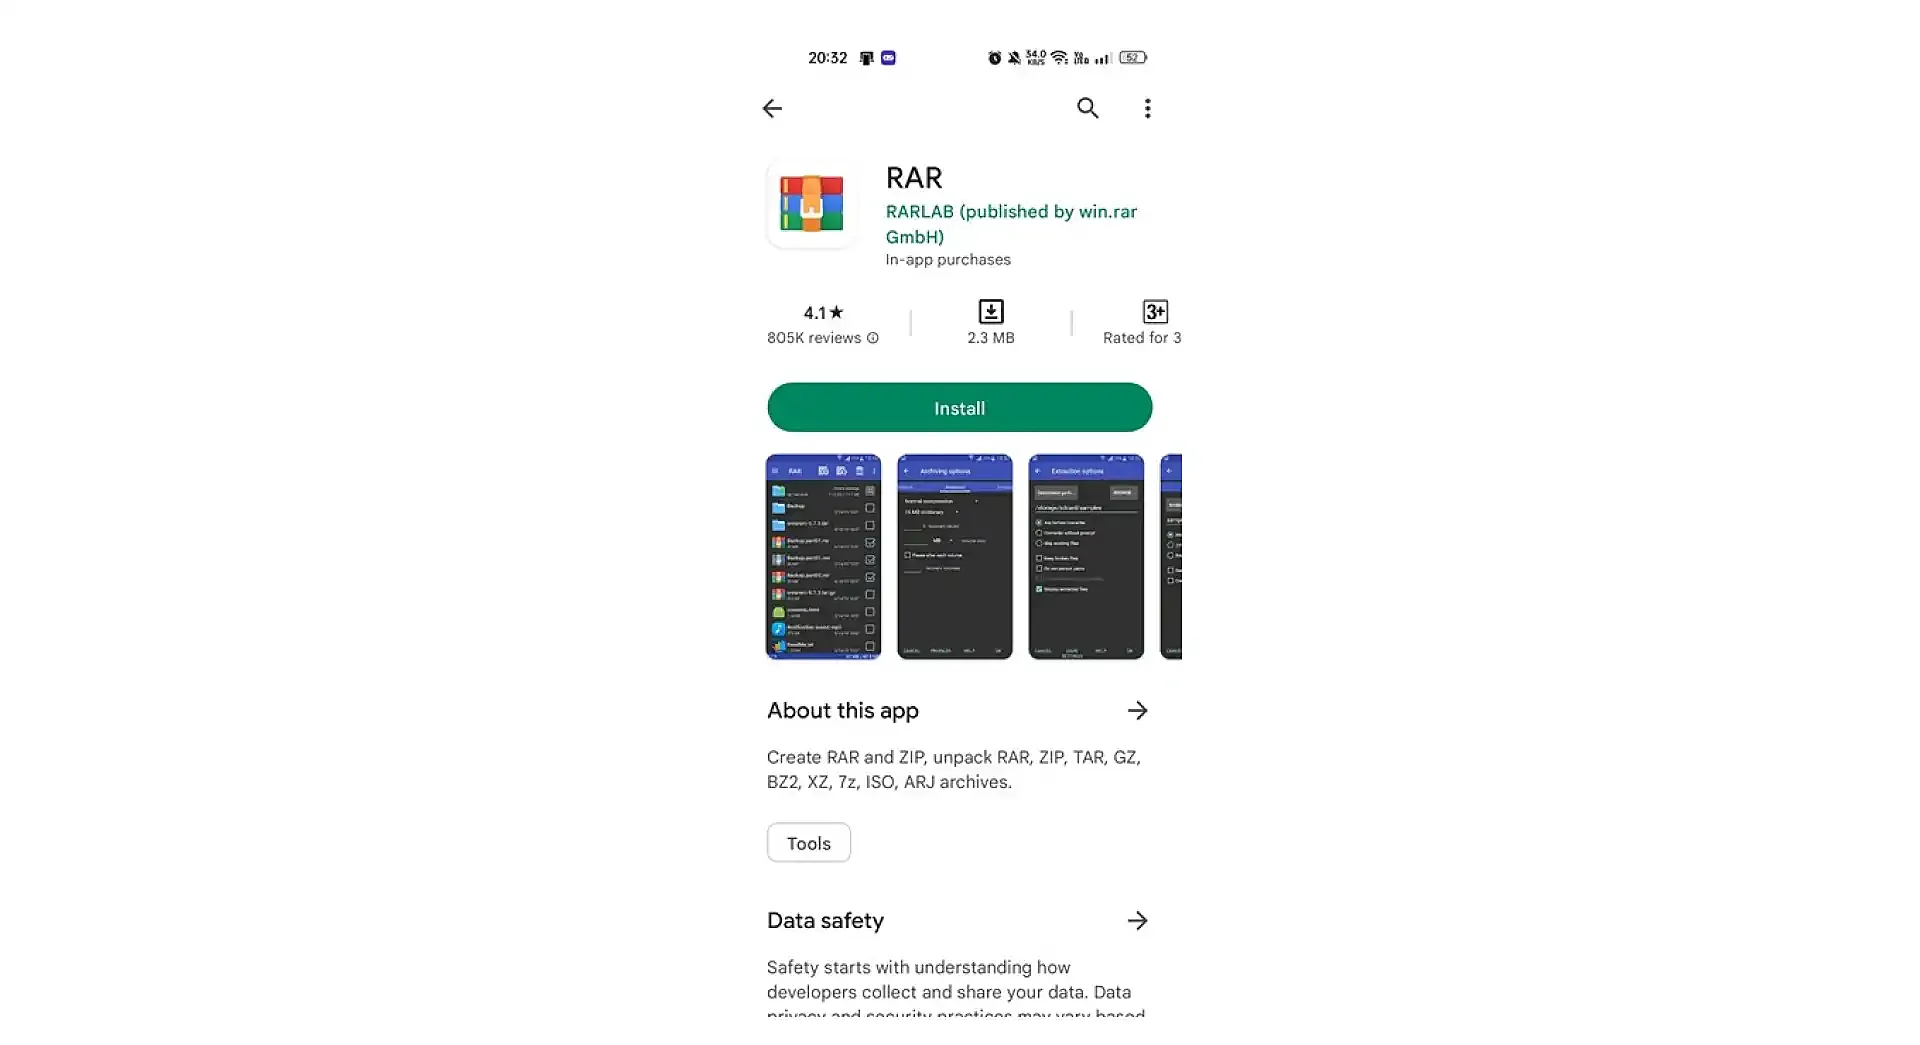 Official RAR app